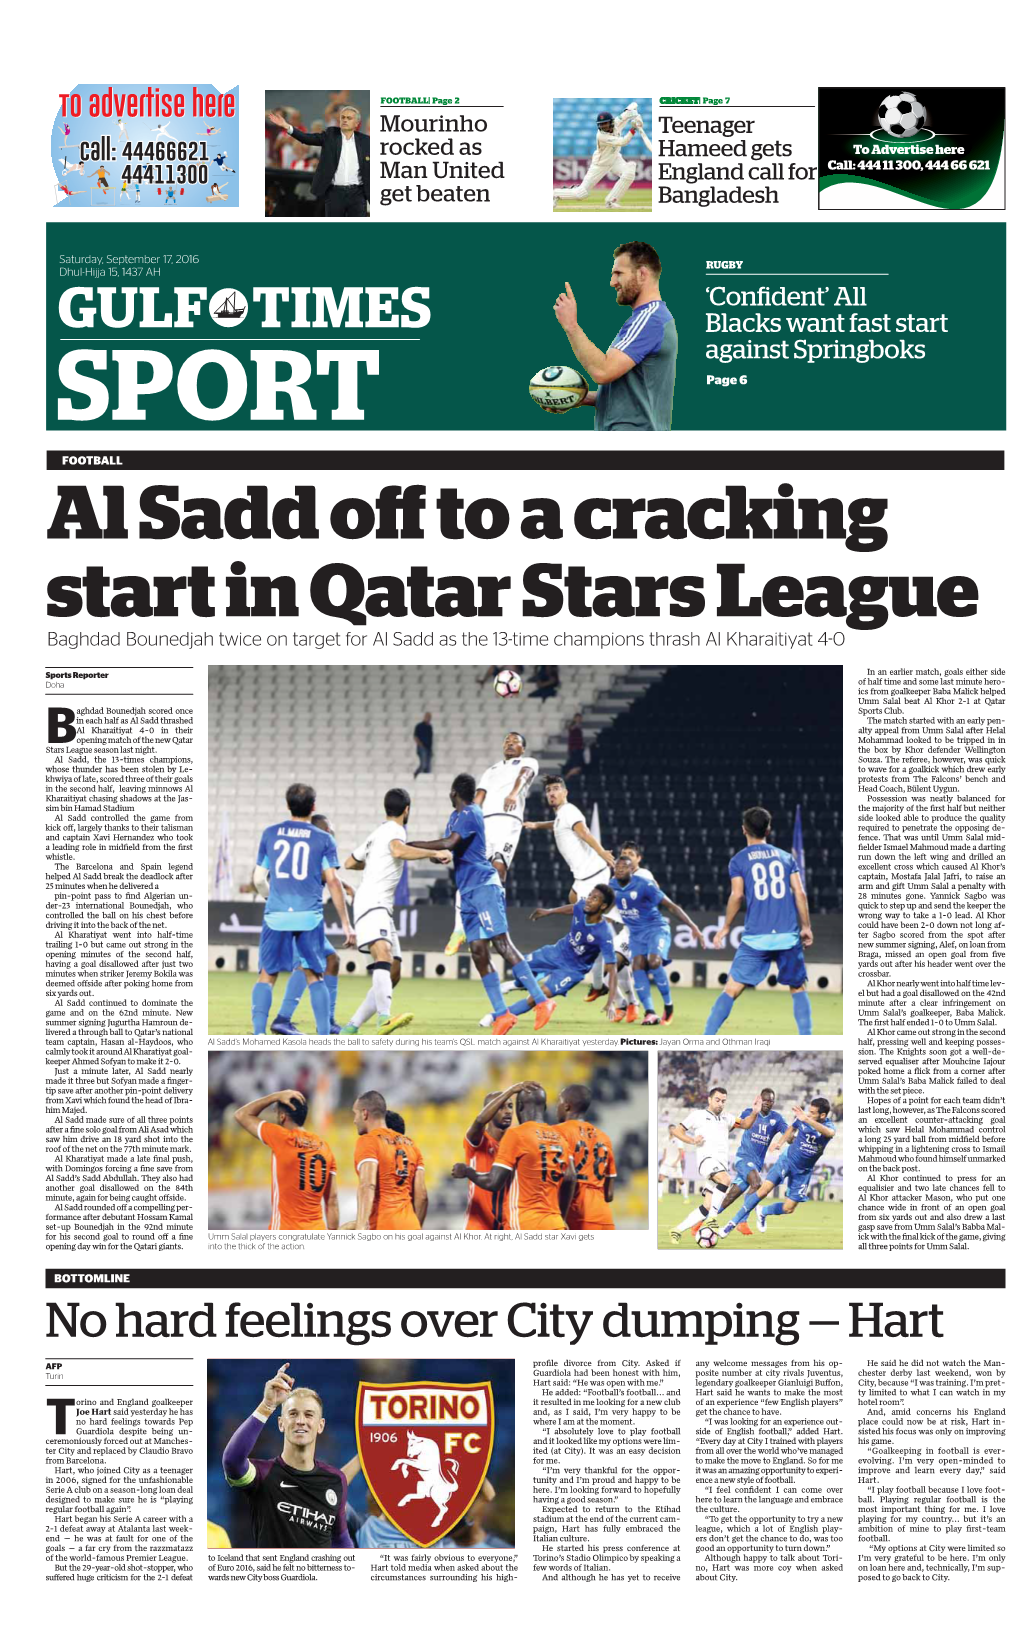 Al Sadd Offto a Cracking Start in Qatar Stars League